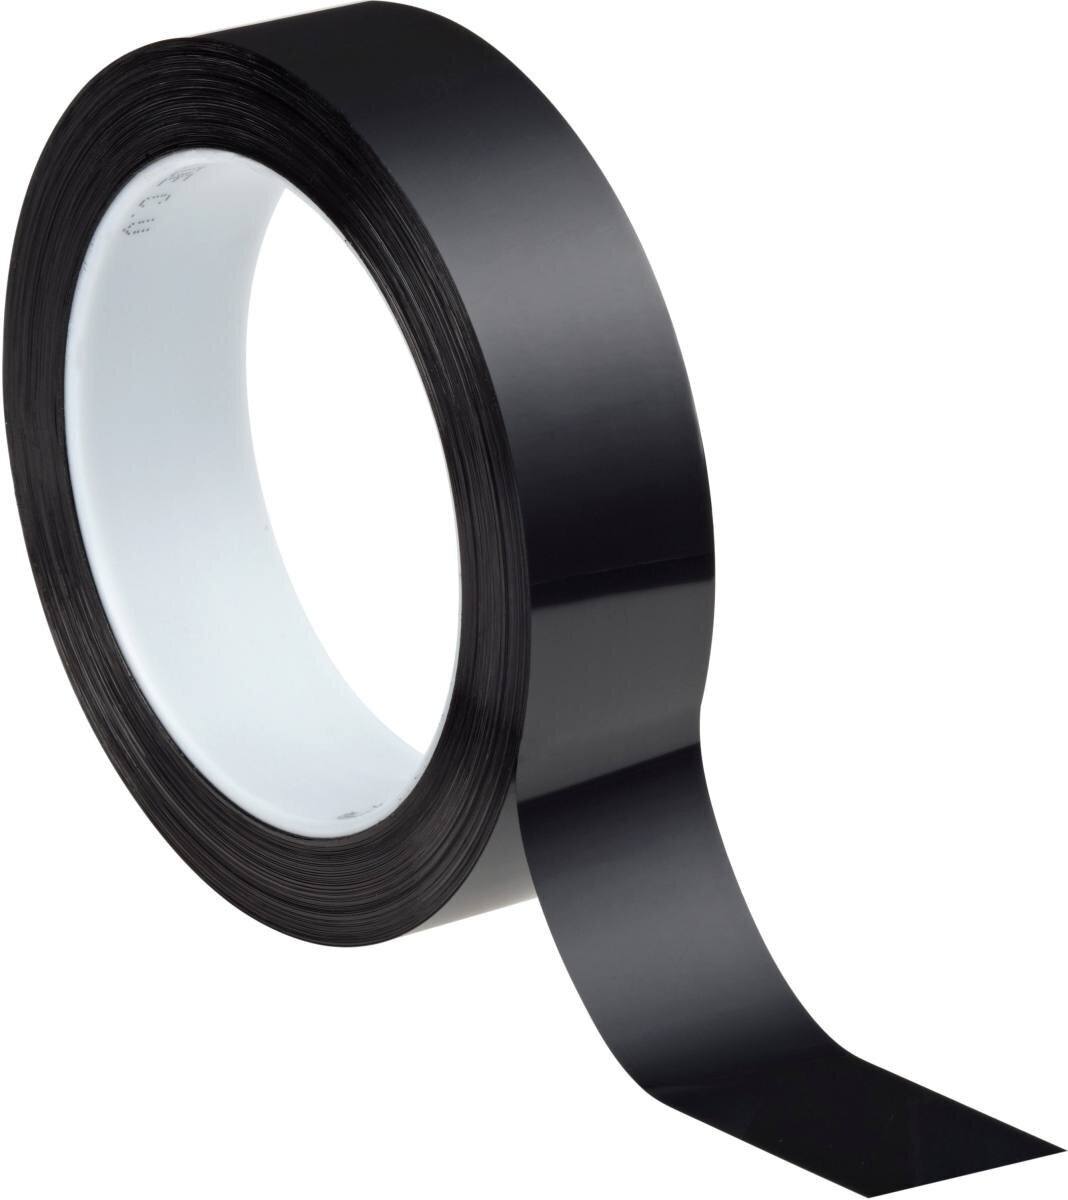 Cinta adhesiva de poliéster 3M 850 F, negra, 25 mm x 66 m, 0,05 mm